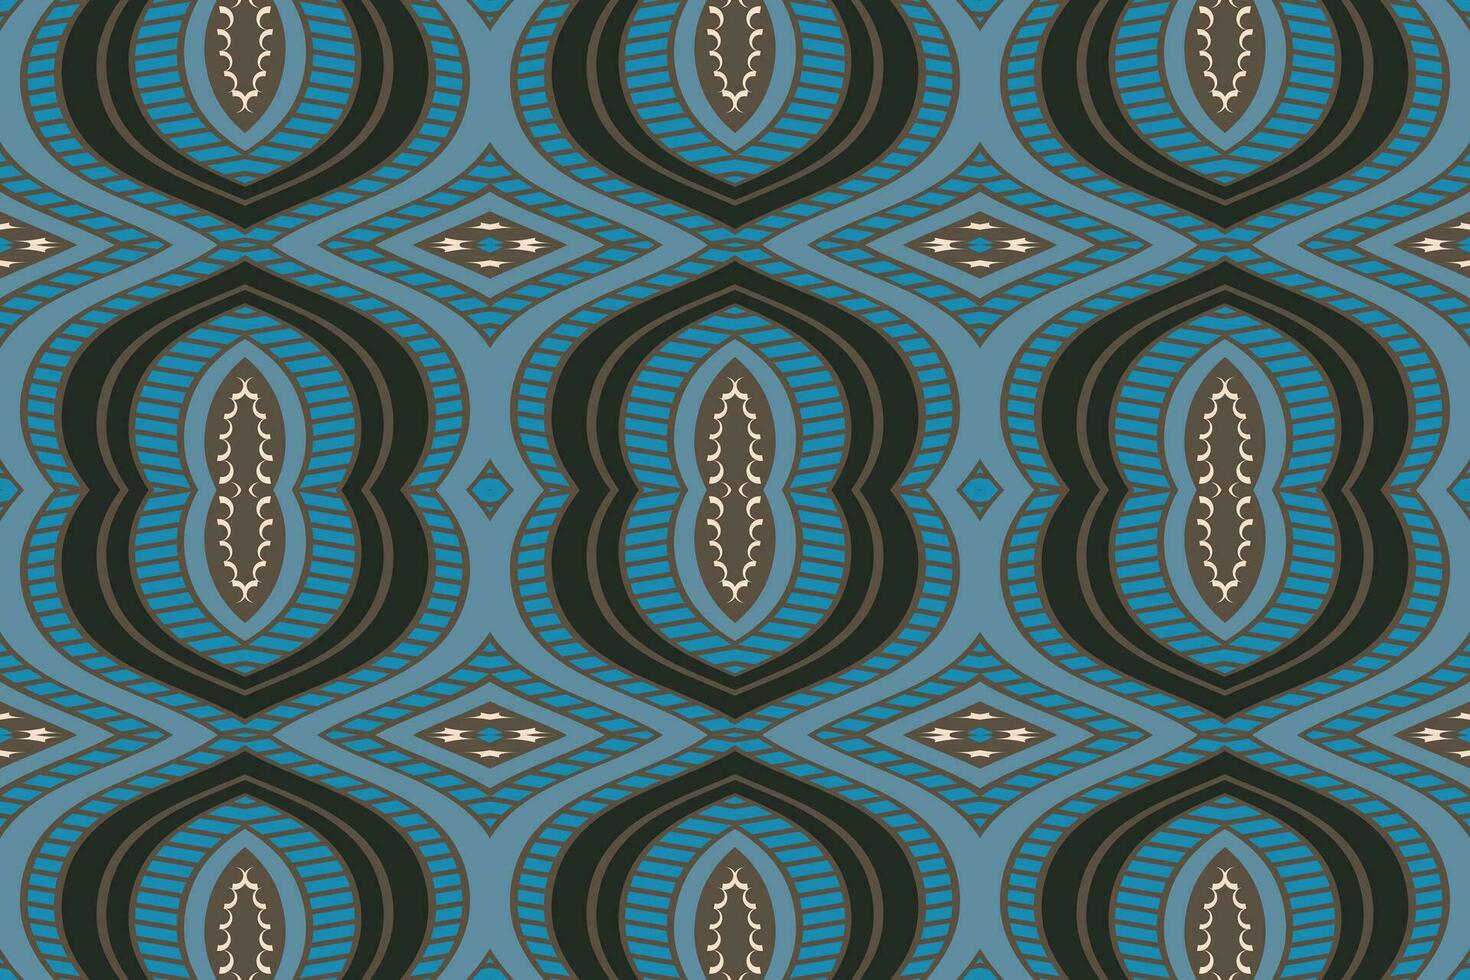 ikat damasco cachemir bordado antecedentes. ikat modelo geométrico étnico oriental modelo tradicional.azteca estilo resumen vector ilustración.diseño para textura,tela,ropa,envoltura,pareo.